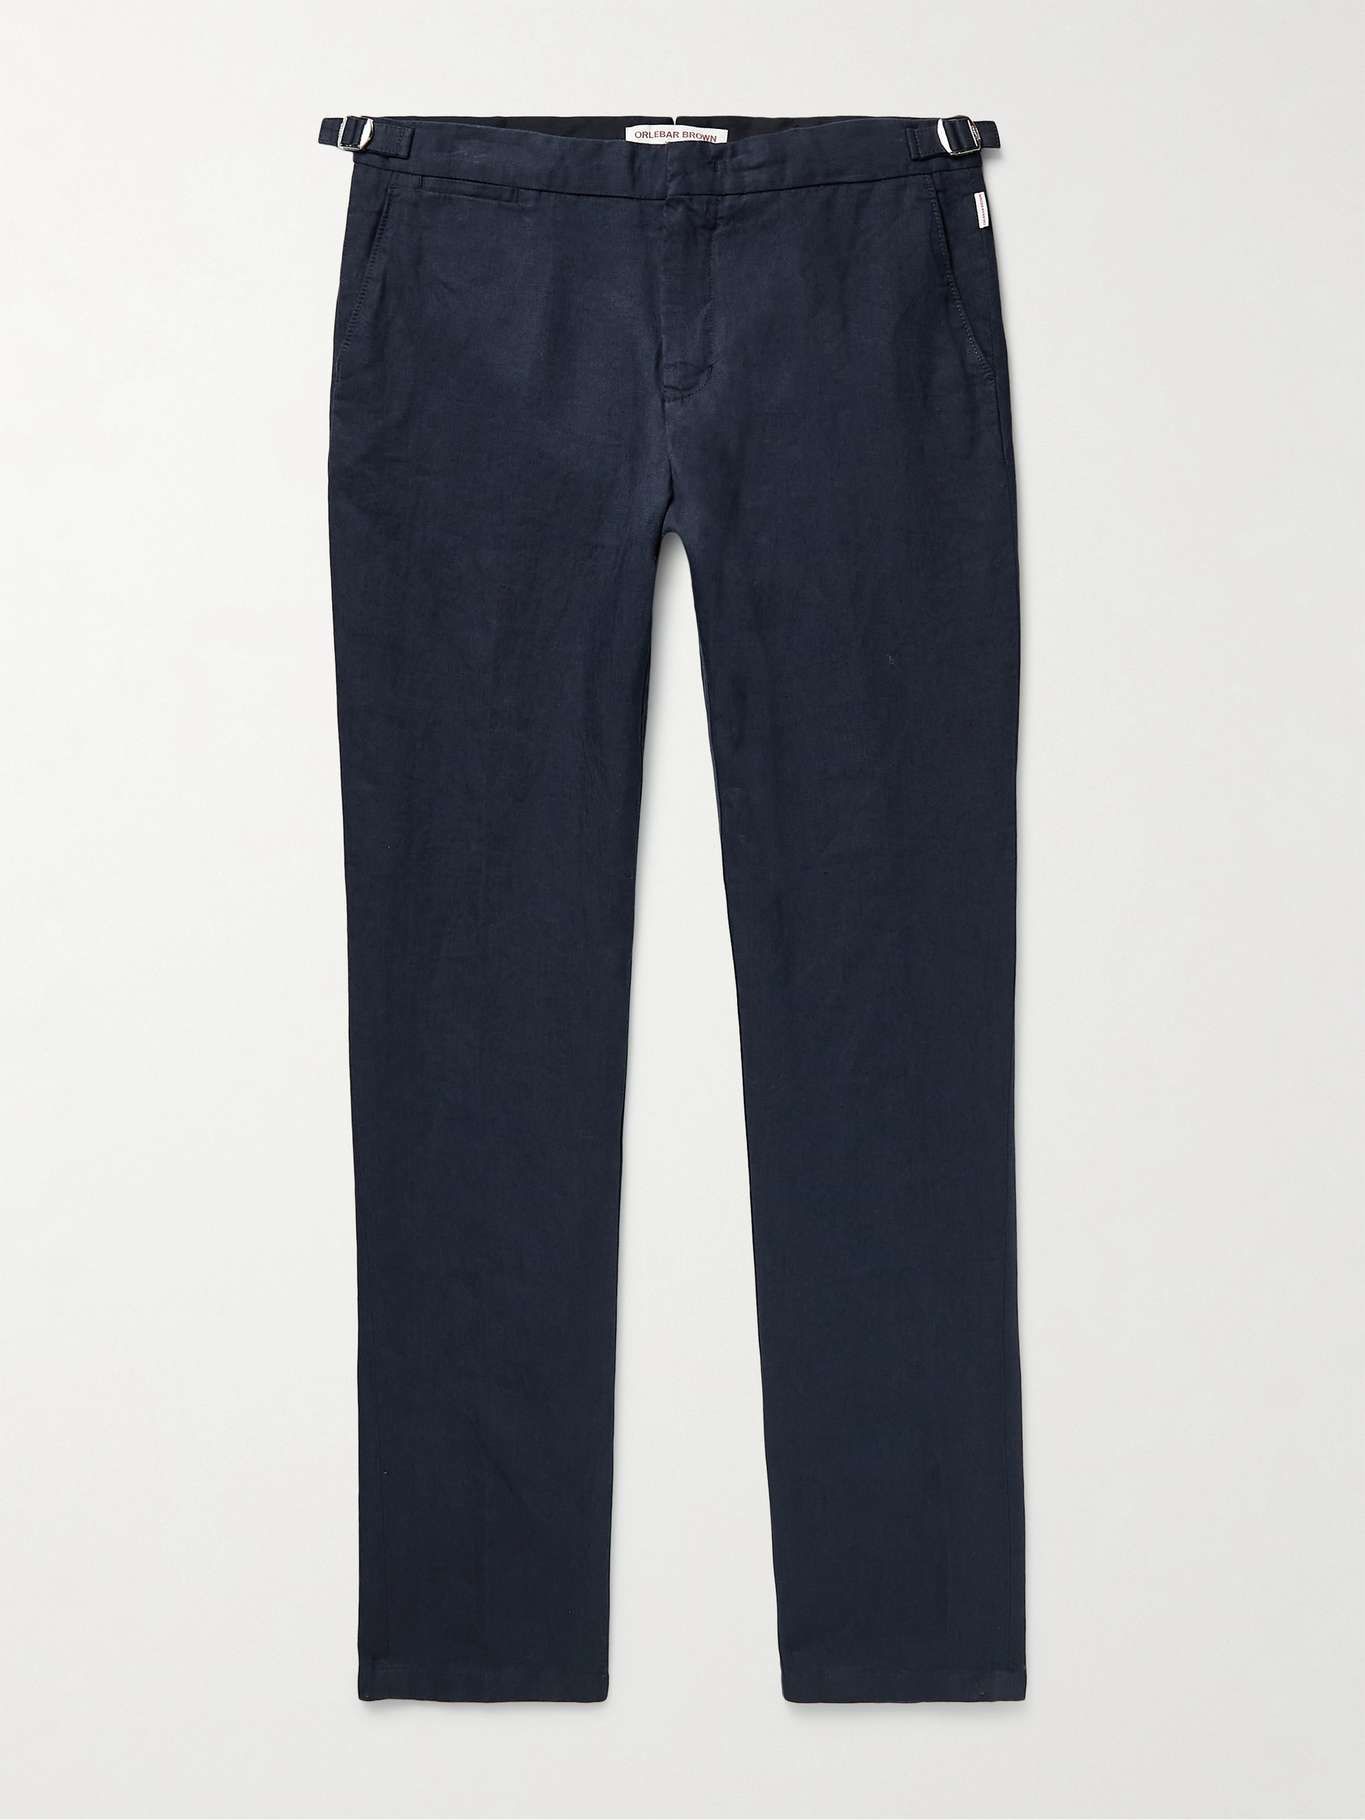 17 Linen Pants Every Man Needs in His Wardrobe